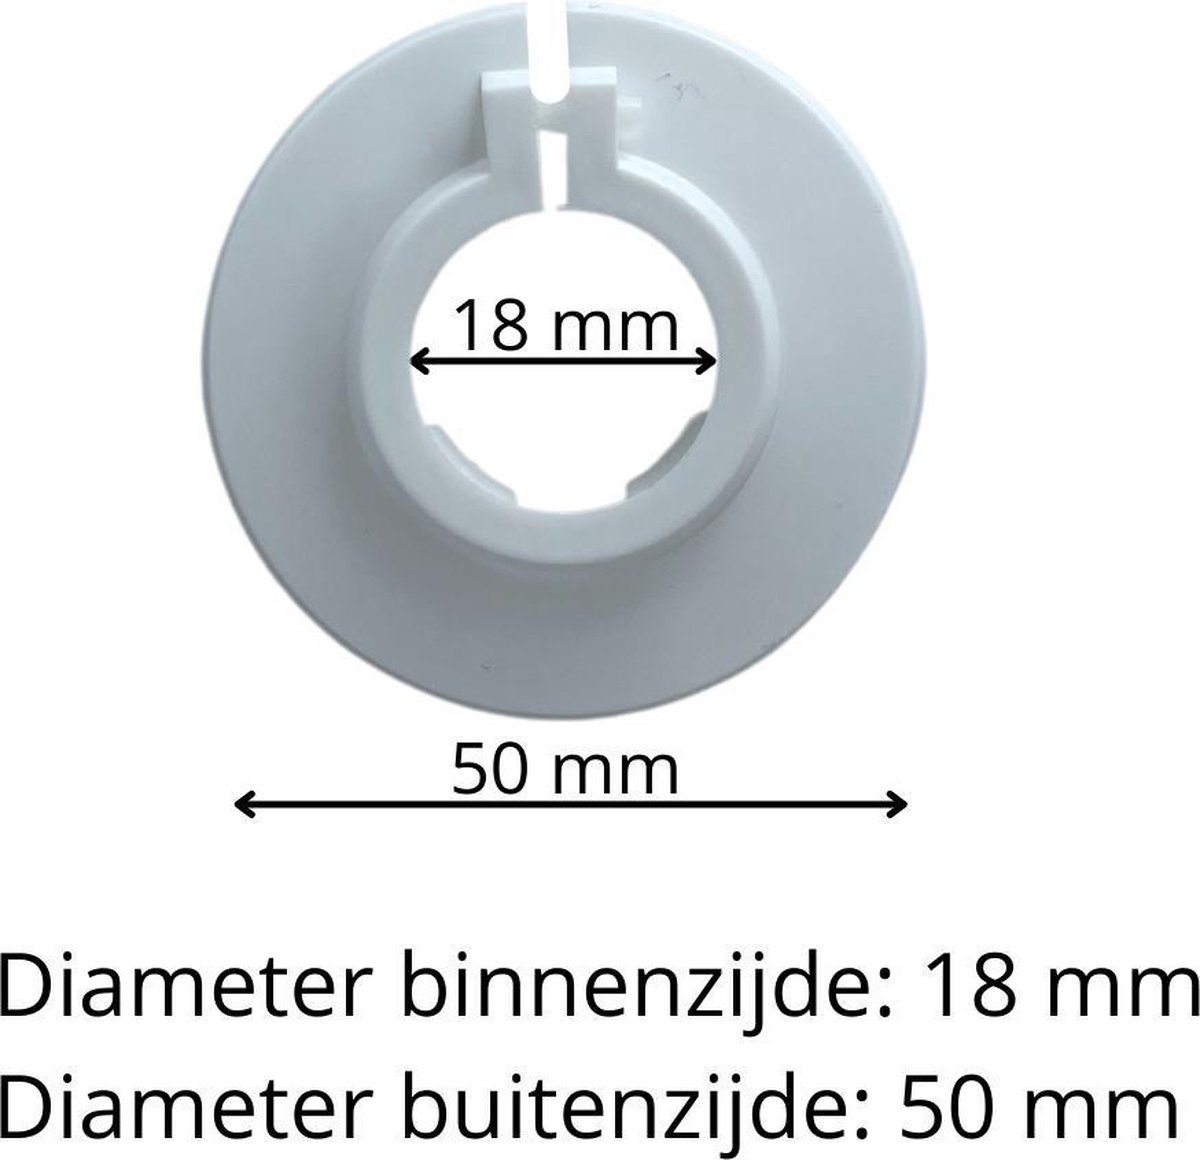 3BMT Klemrozet - Buisrozet ø 18 mm - Design